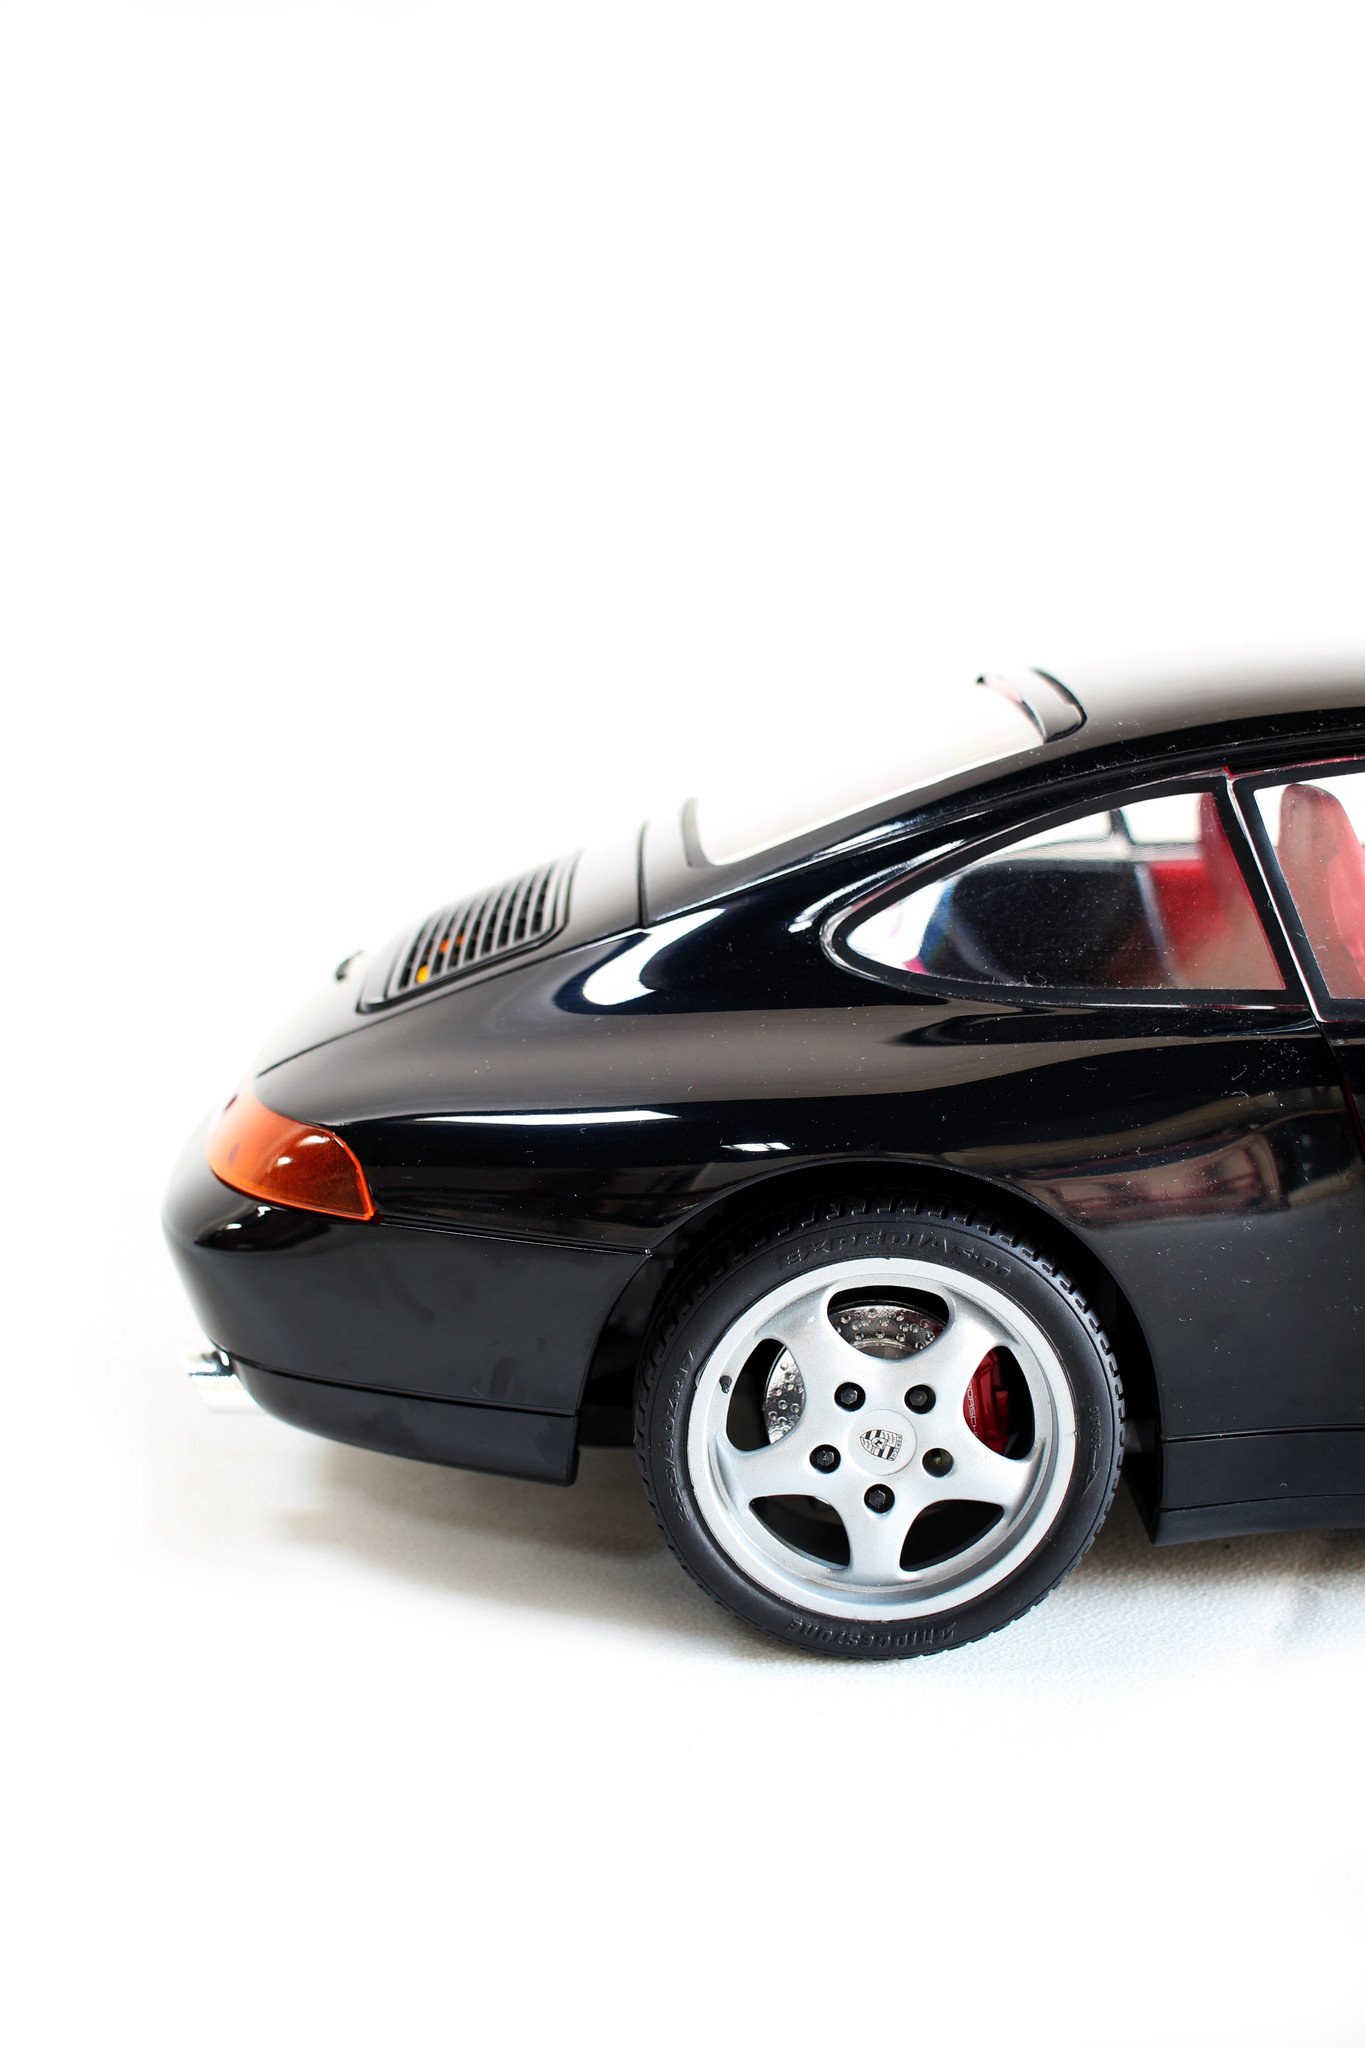 Scale model 1: 8 Porsche 993 Pocher